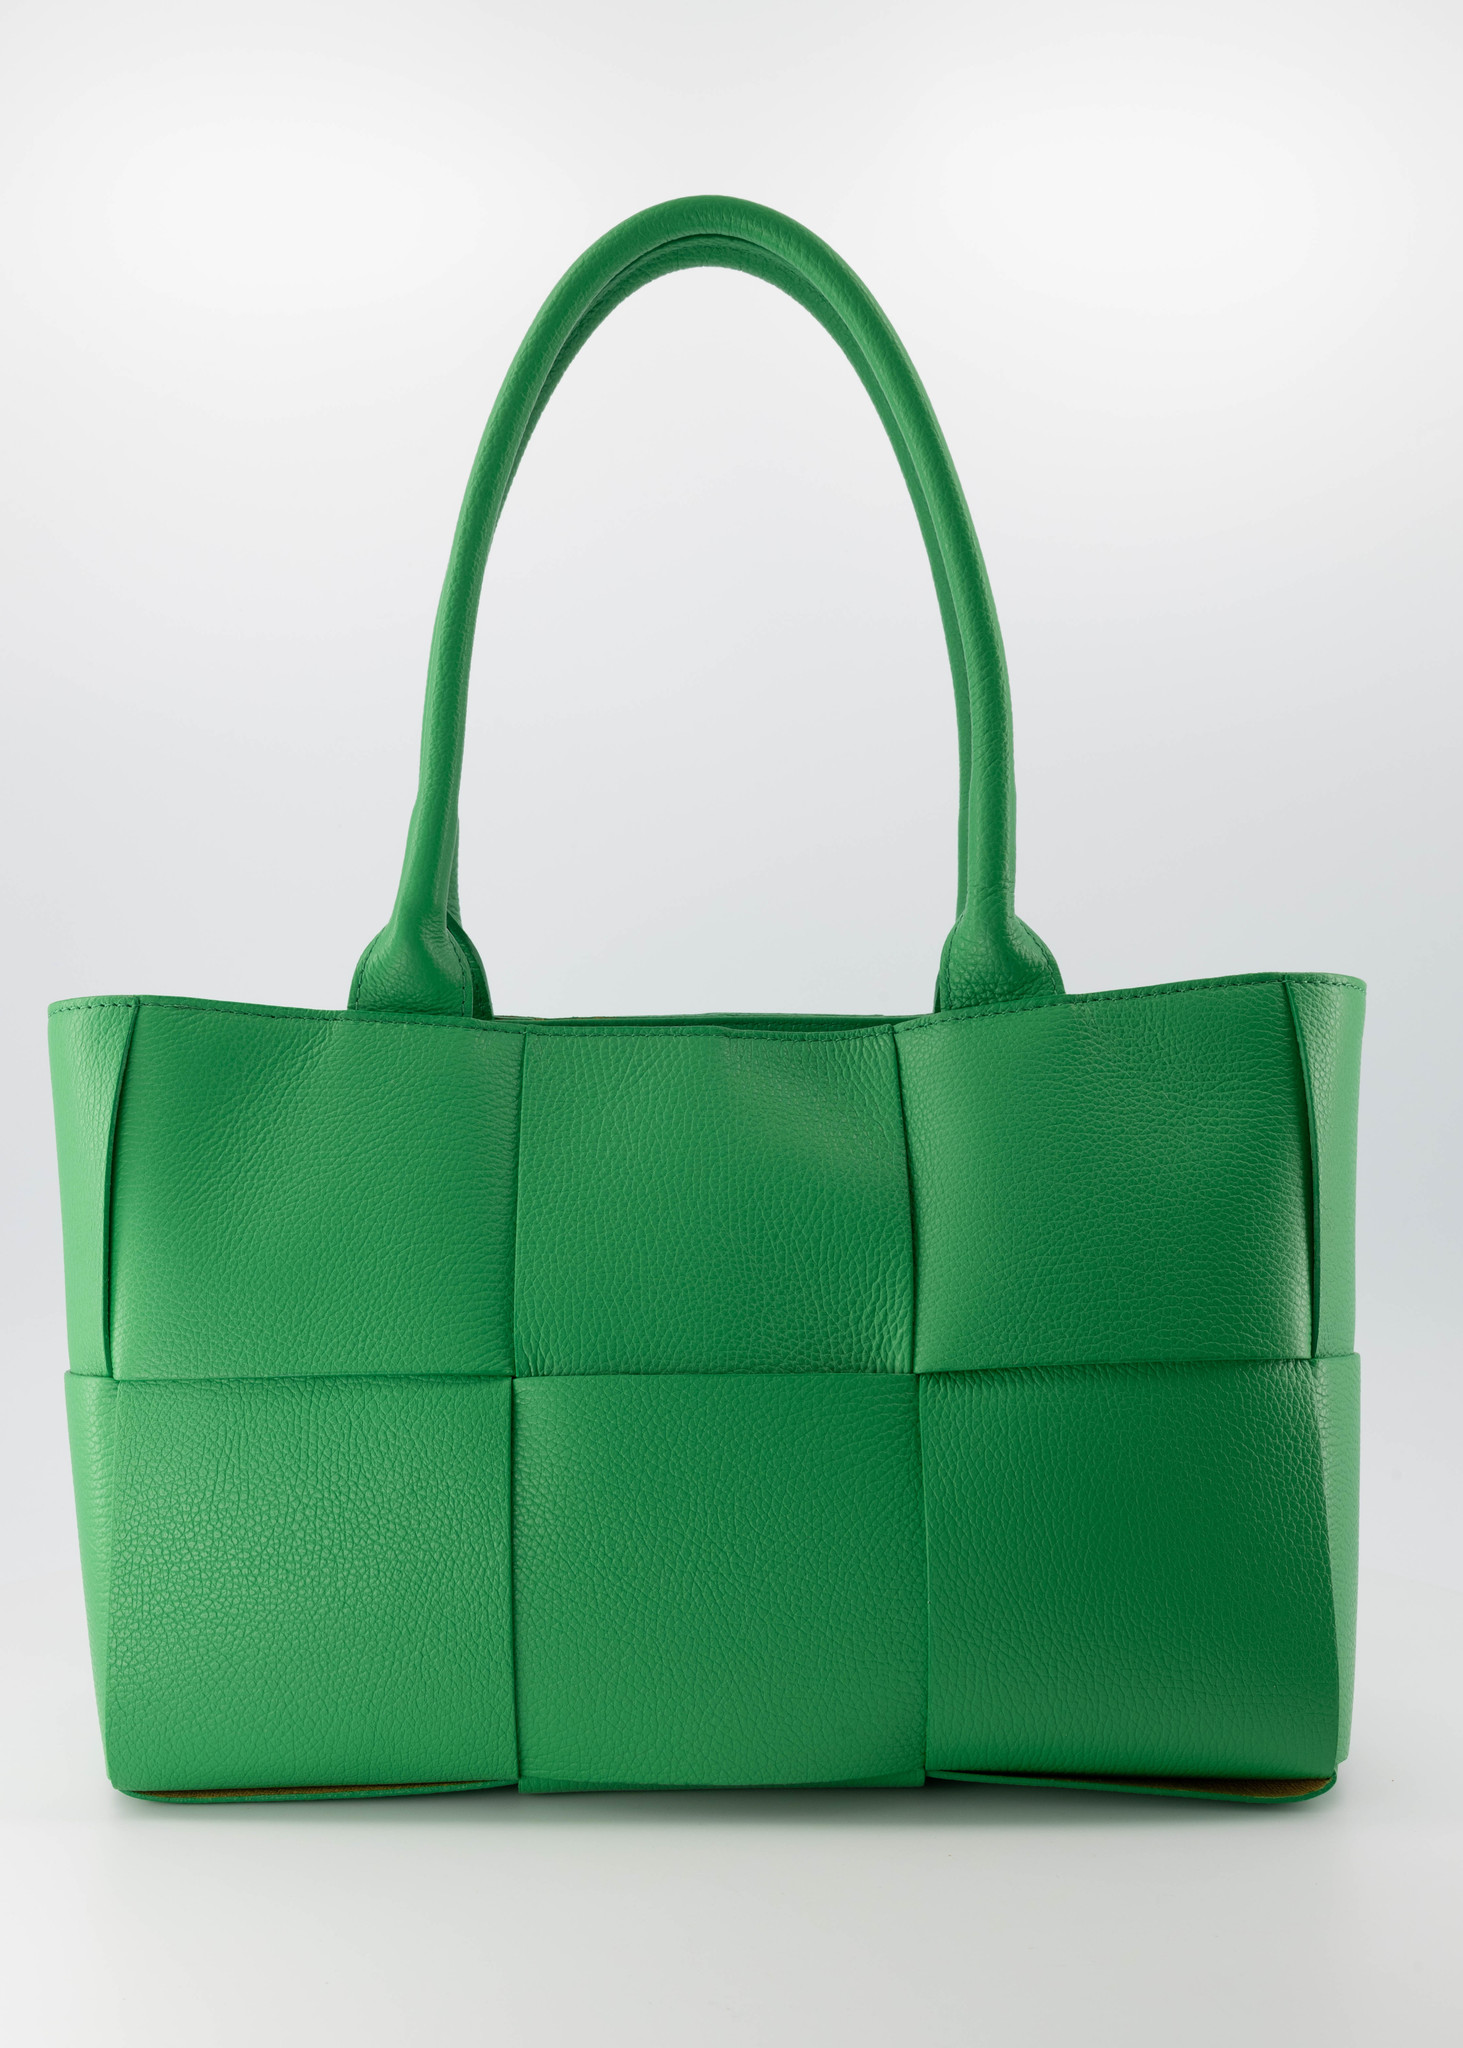 This Hermès bag puts on sideline Sharon Cuneta's rumored marital troubles  in 2008 | PEP.ph